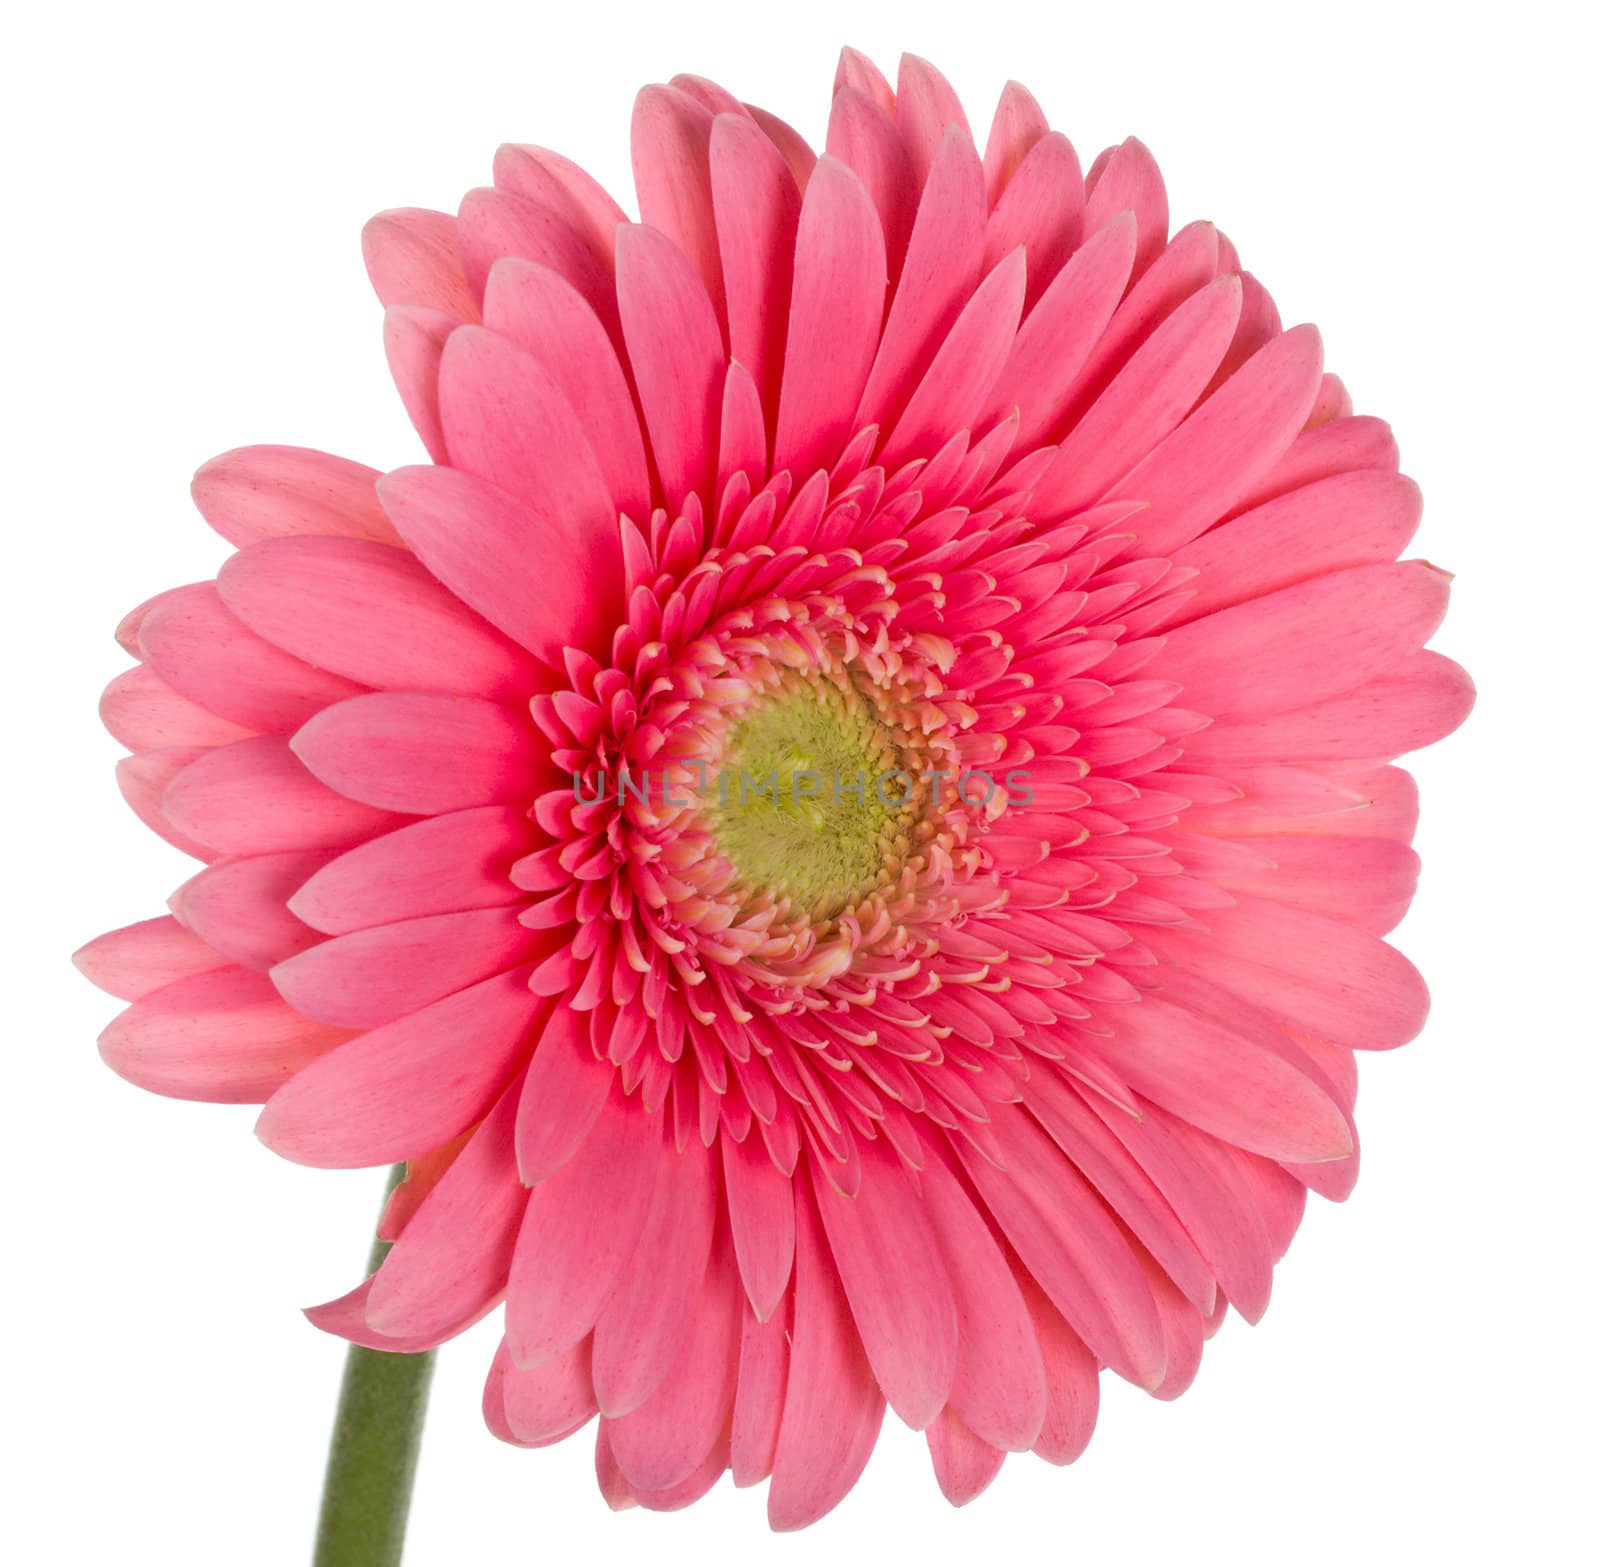 pink gerbera flower by Alekcey